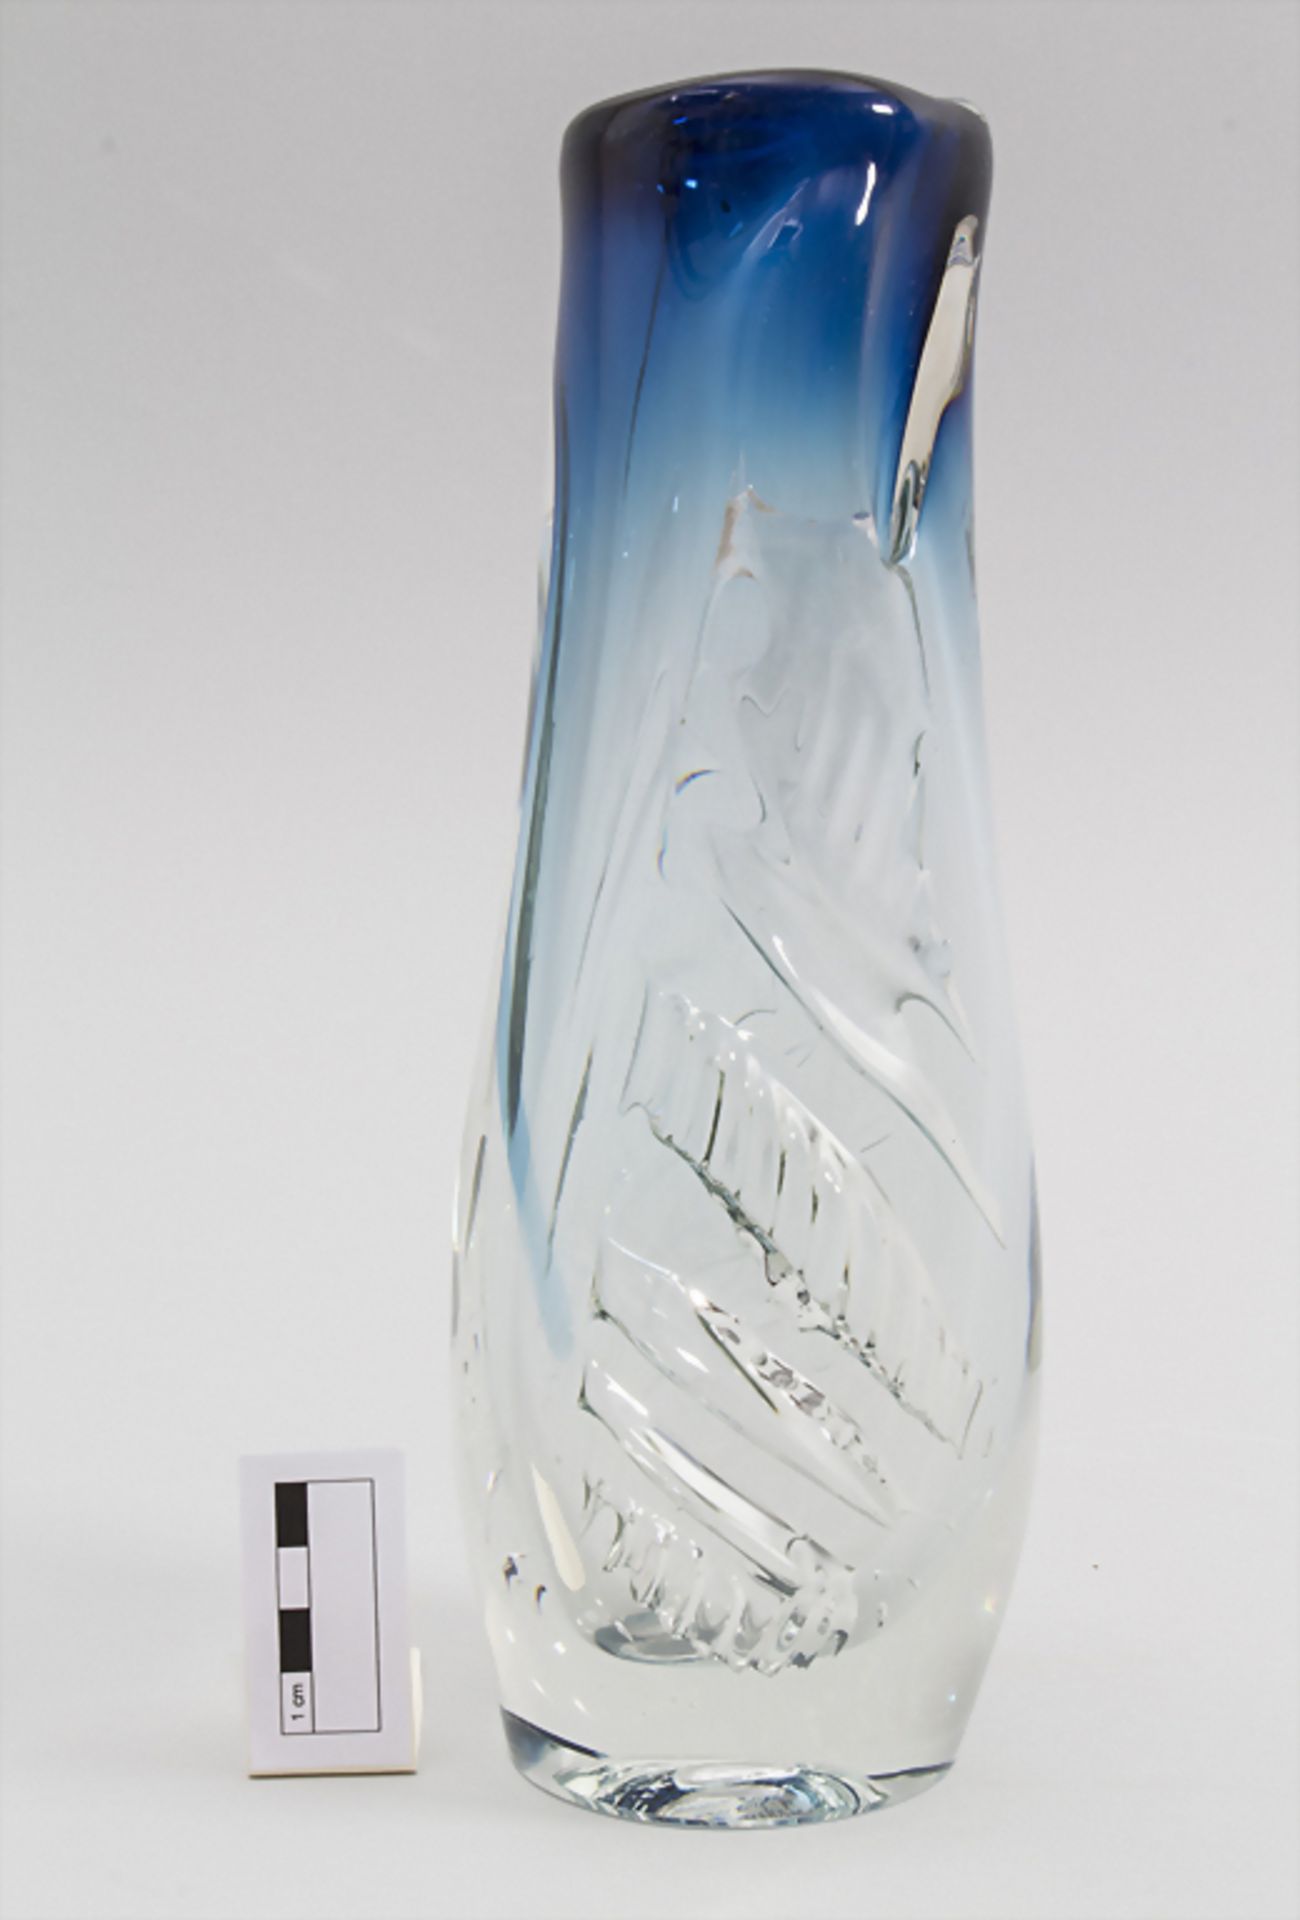 Ziervase / A decorative vase, Graal Glashütte, Dürnau, Entw. Prof. Konrad Habermeier, 70er - Image 2 of 6